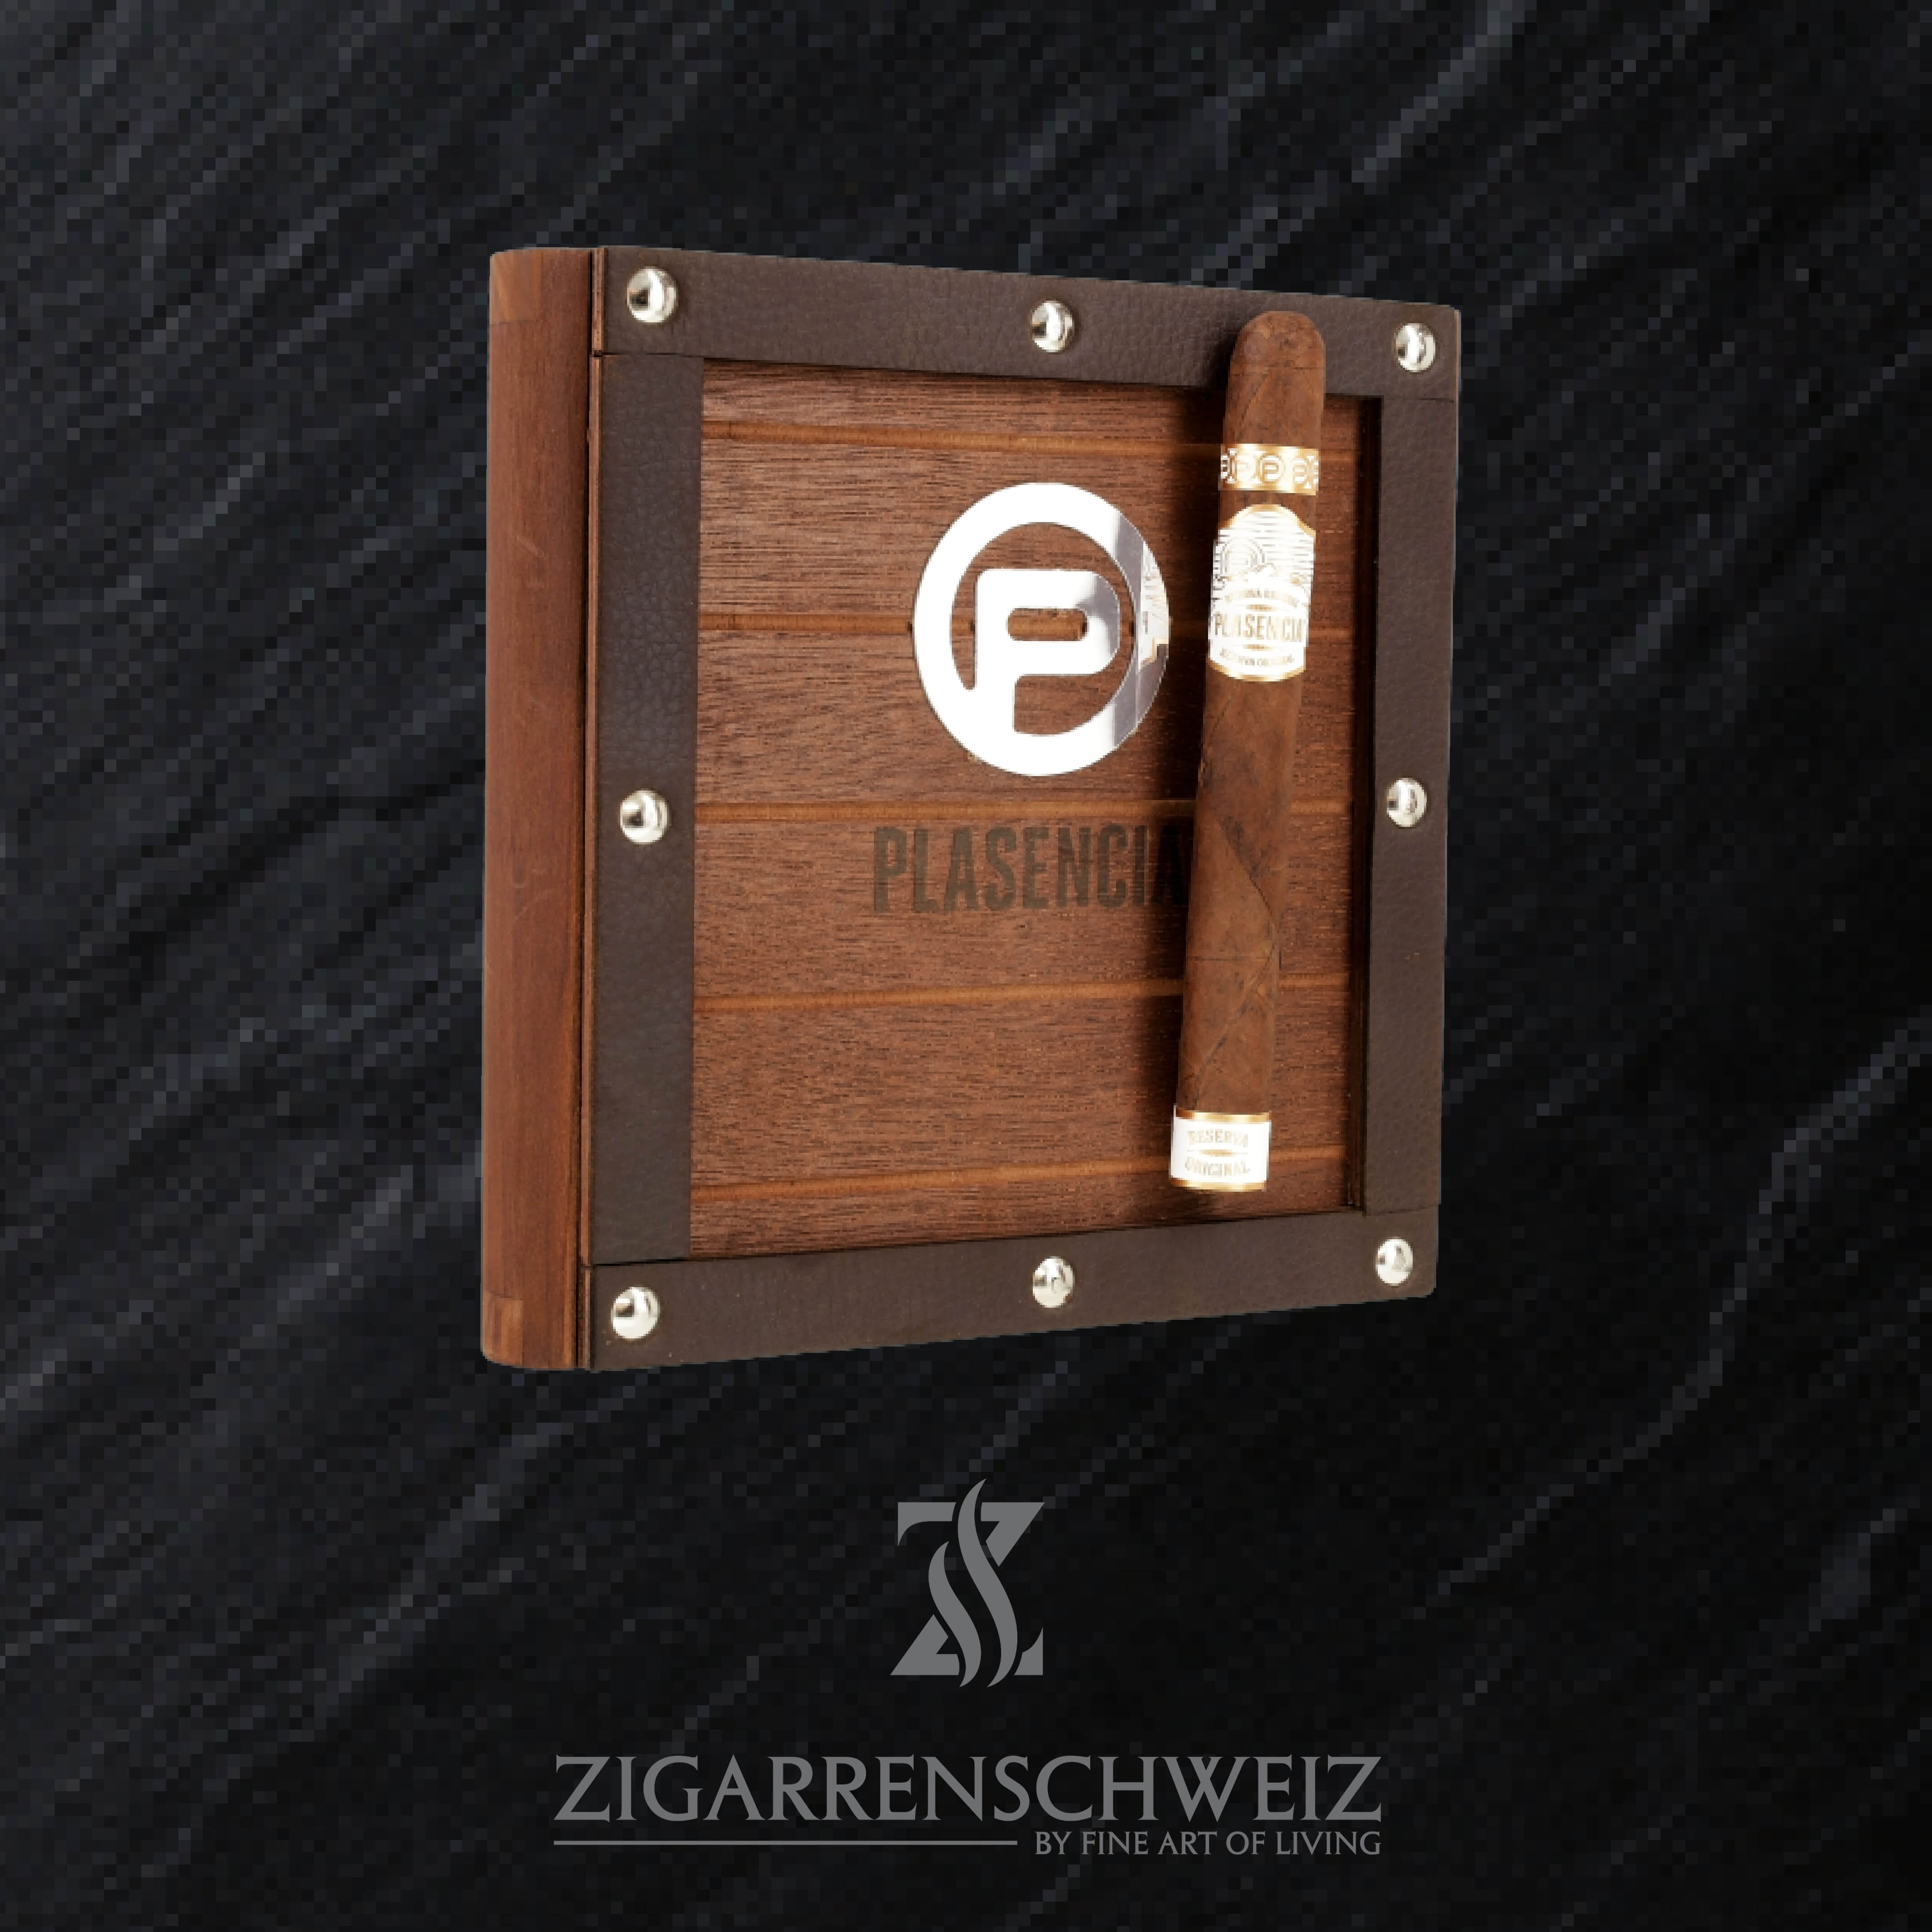 Plasencia Reserva Original Zigarren Kiste geschlossen